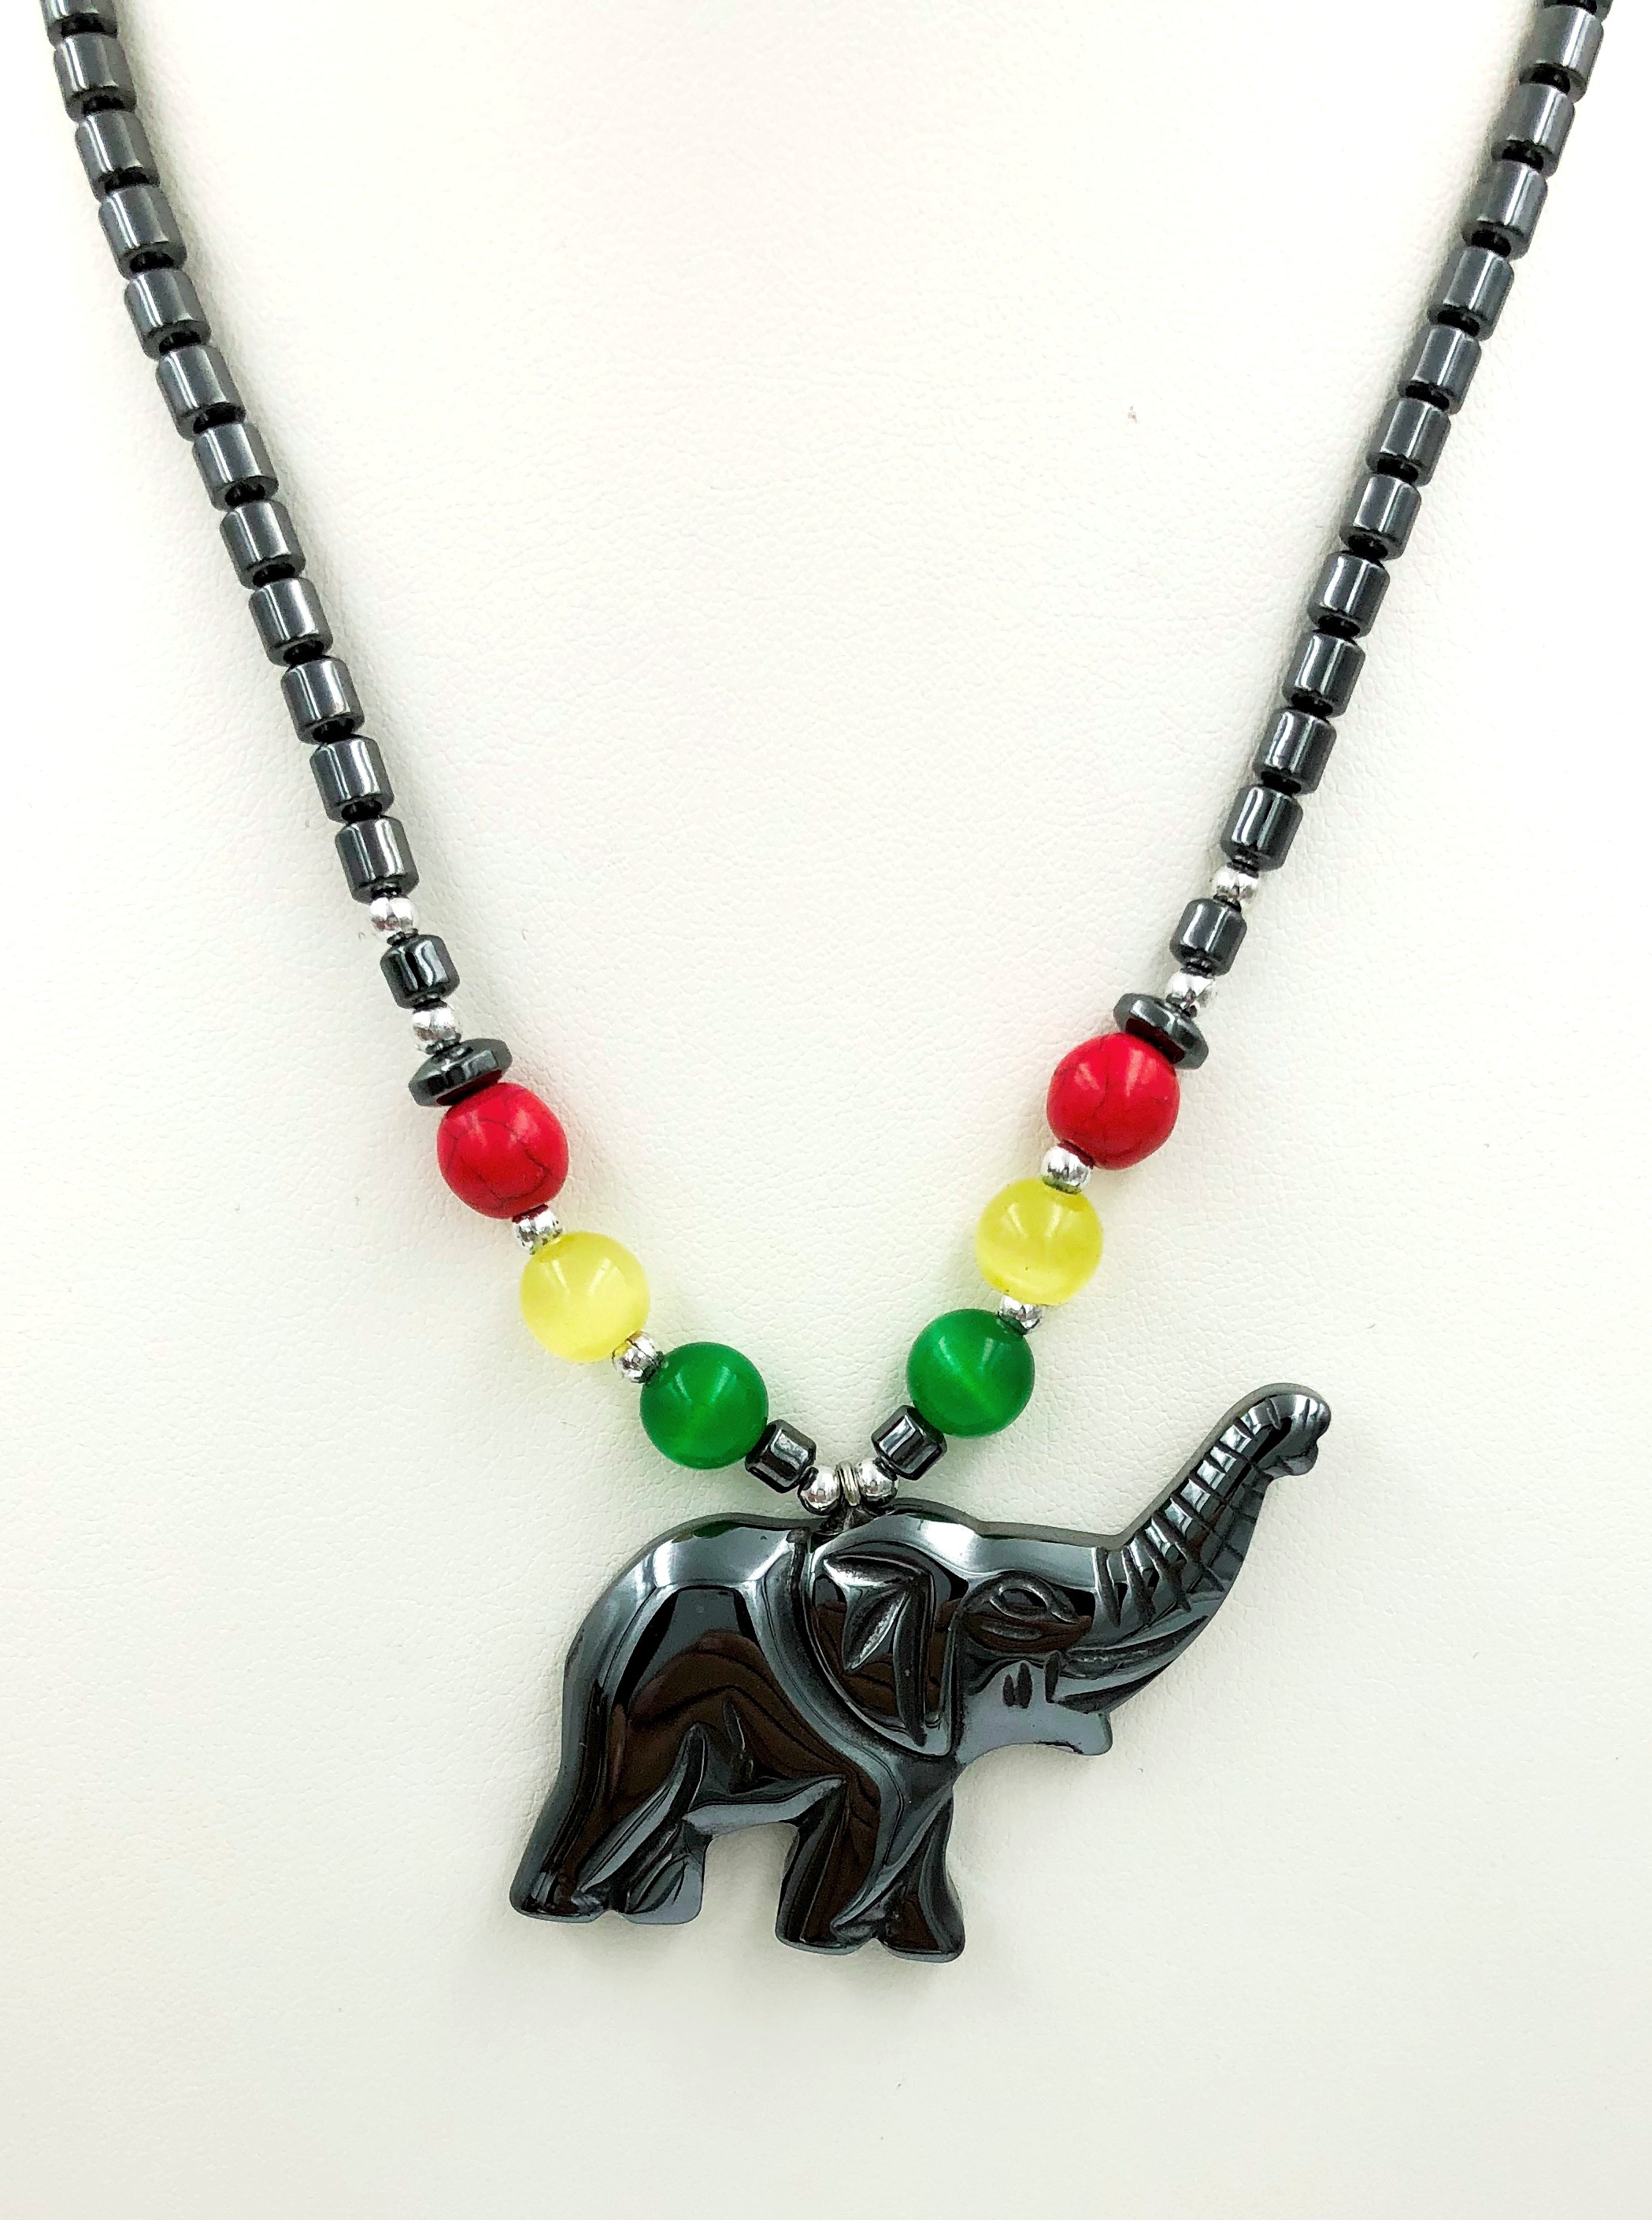 Dozen Elephant With Multi Color Beads Hematite Necklace #HN-83494